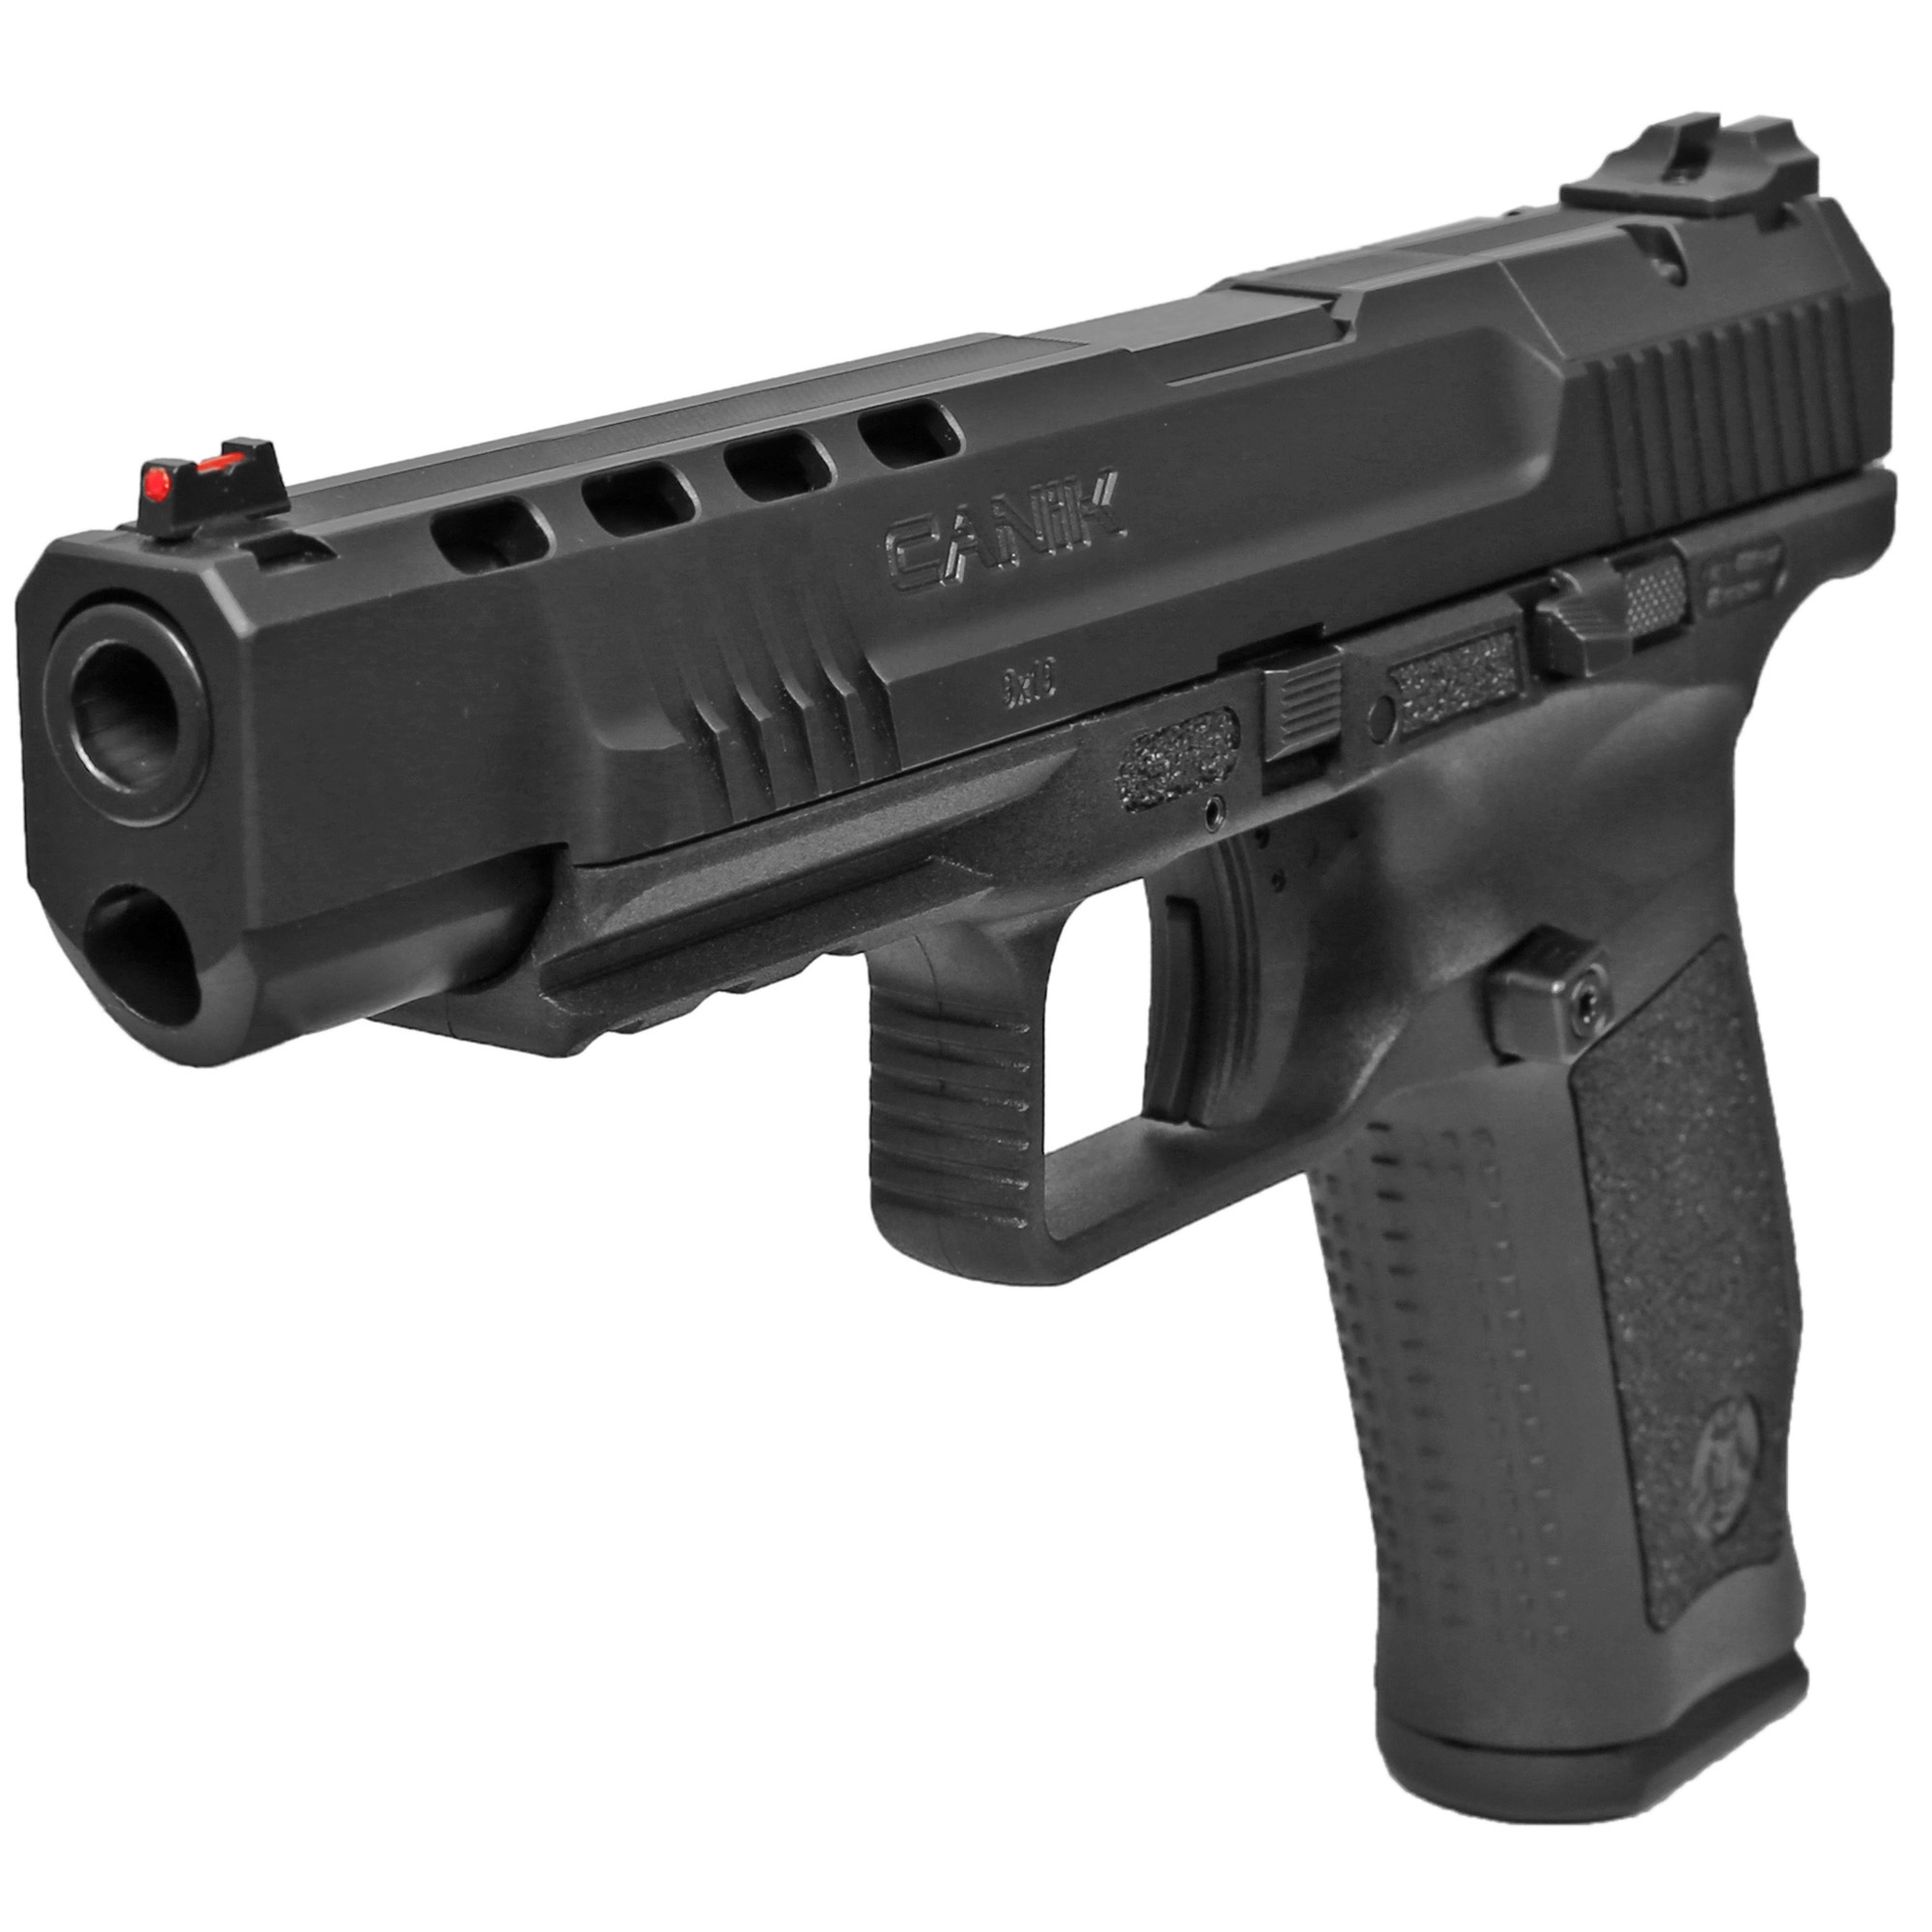 century-canik-tp9sfx-pistol-black-5-2-9mm-20rd